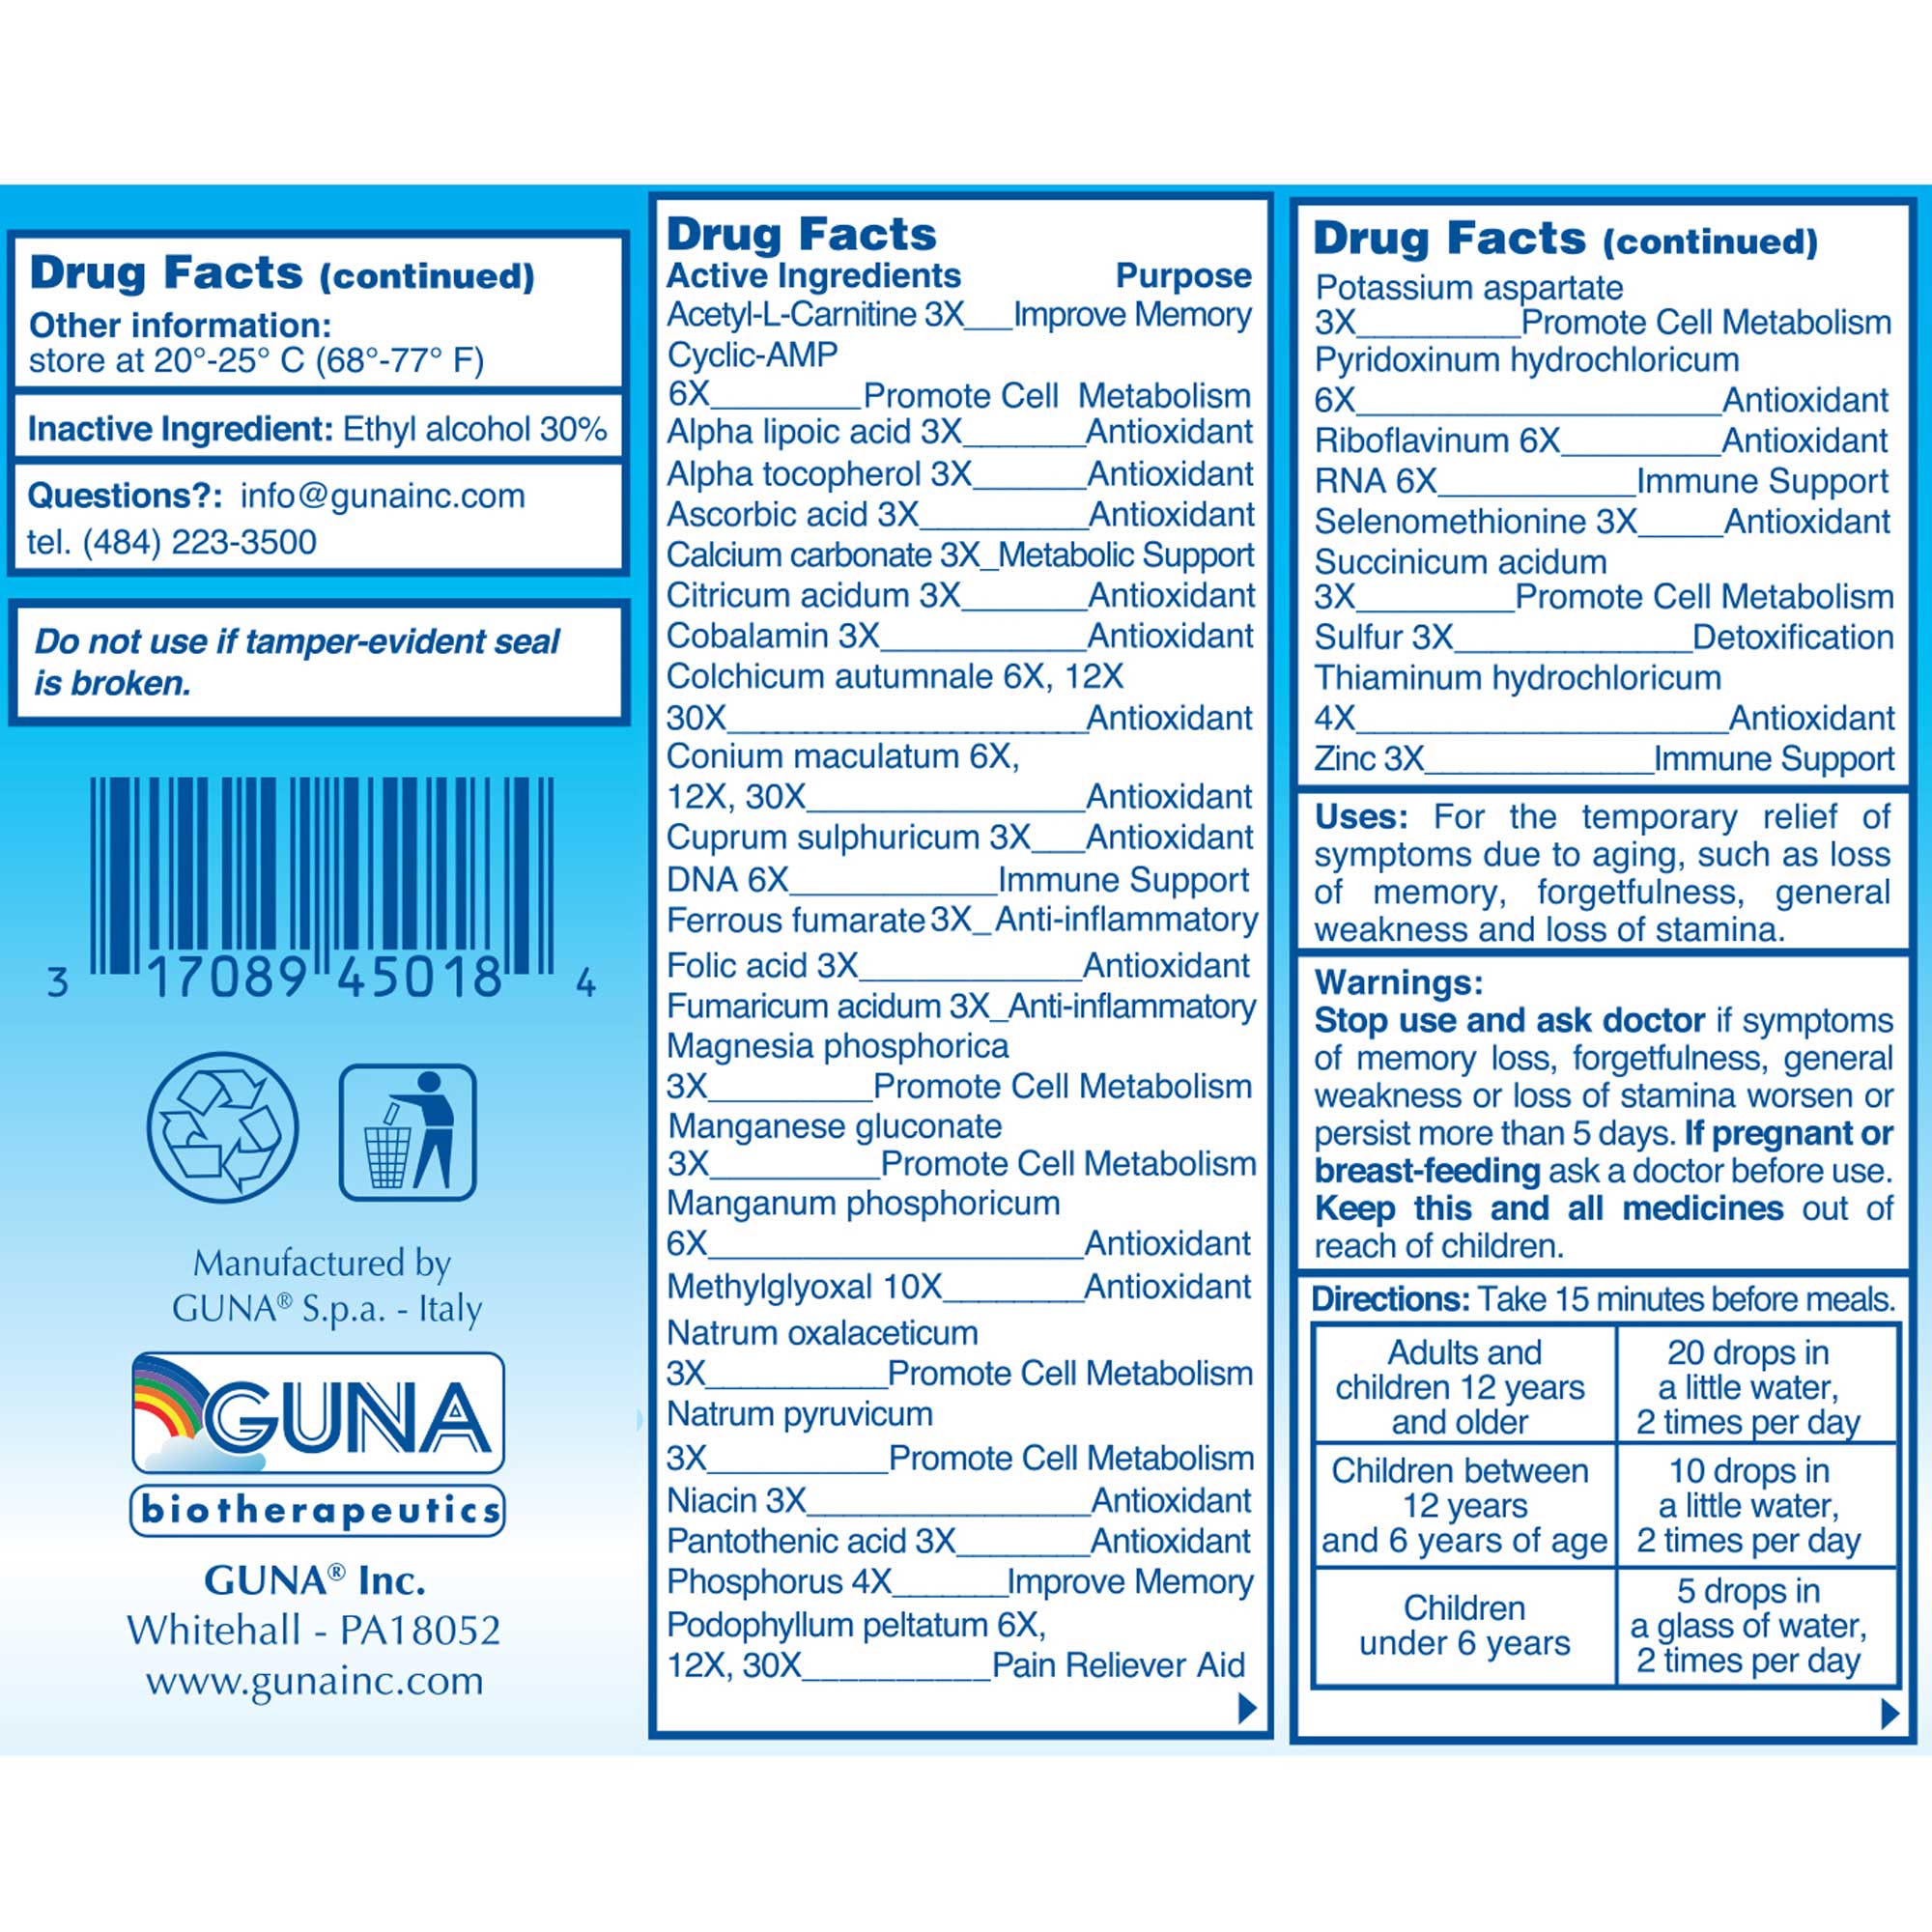 GUNA Biotherapeutics GUNA-CELL Ingredients